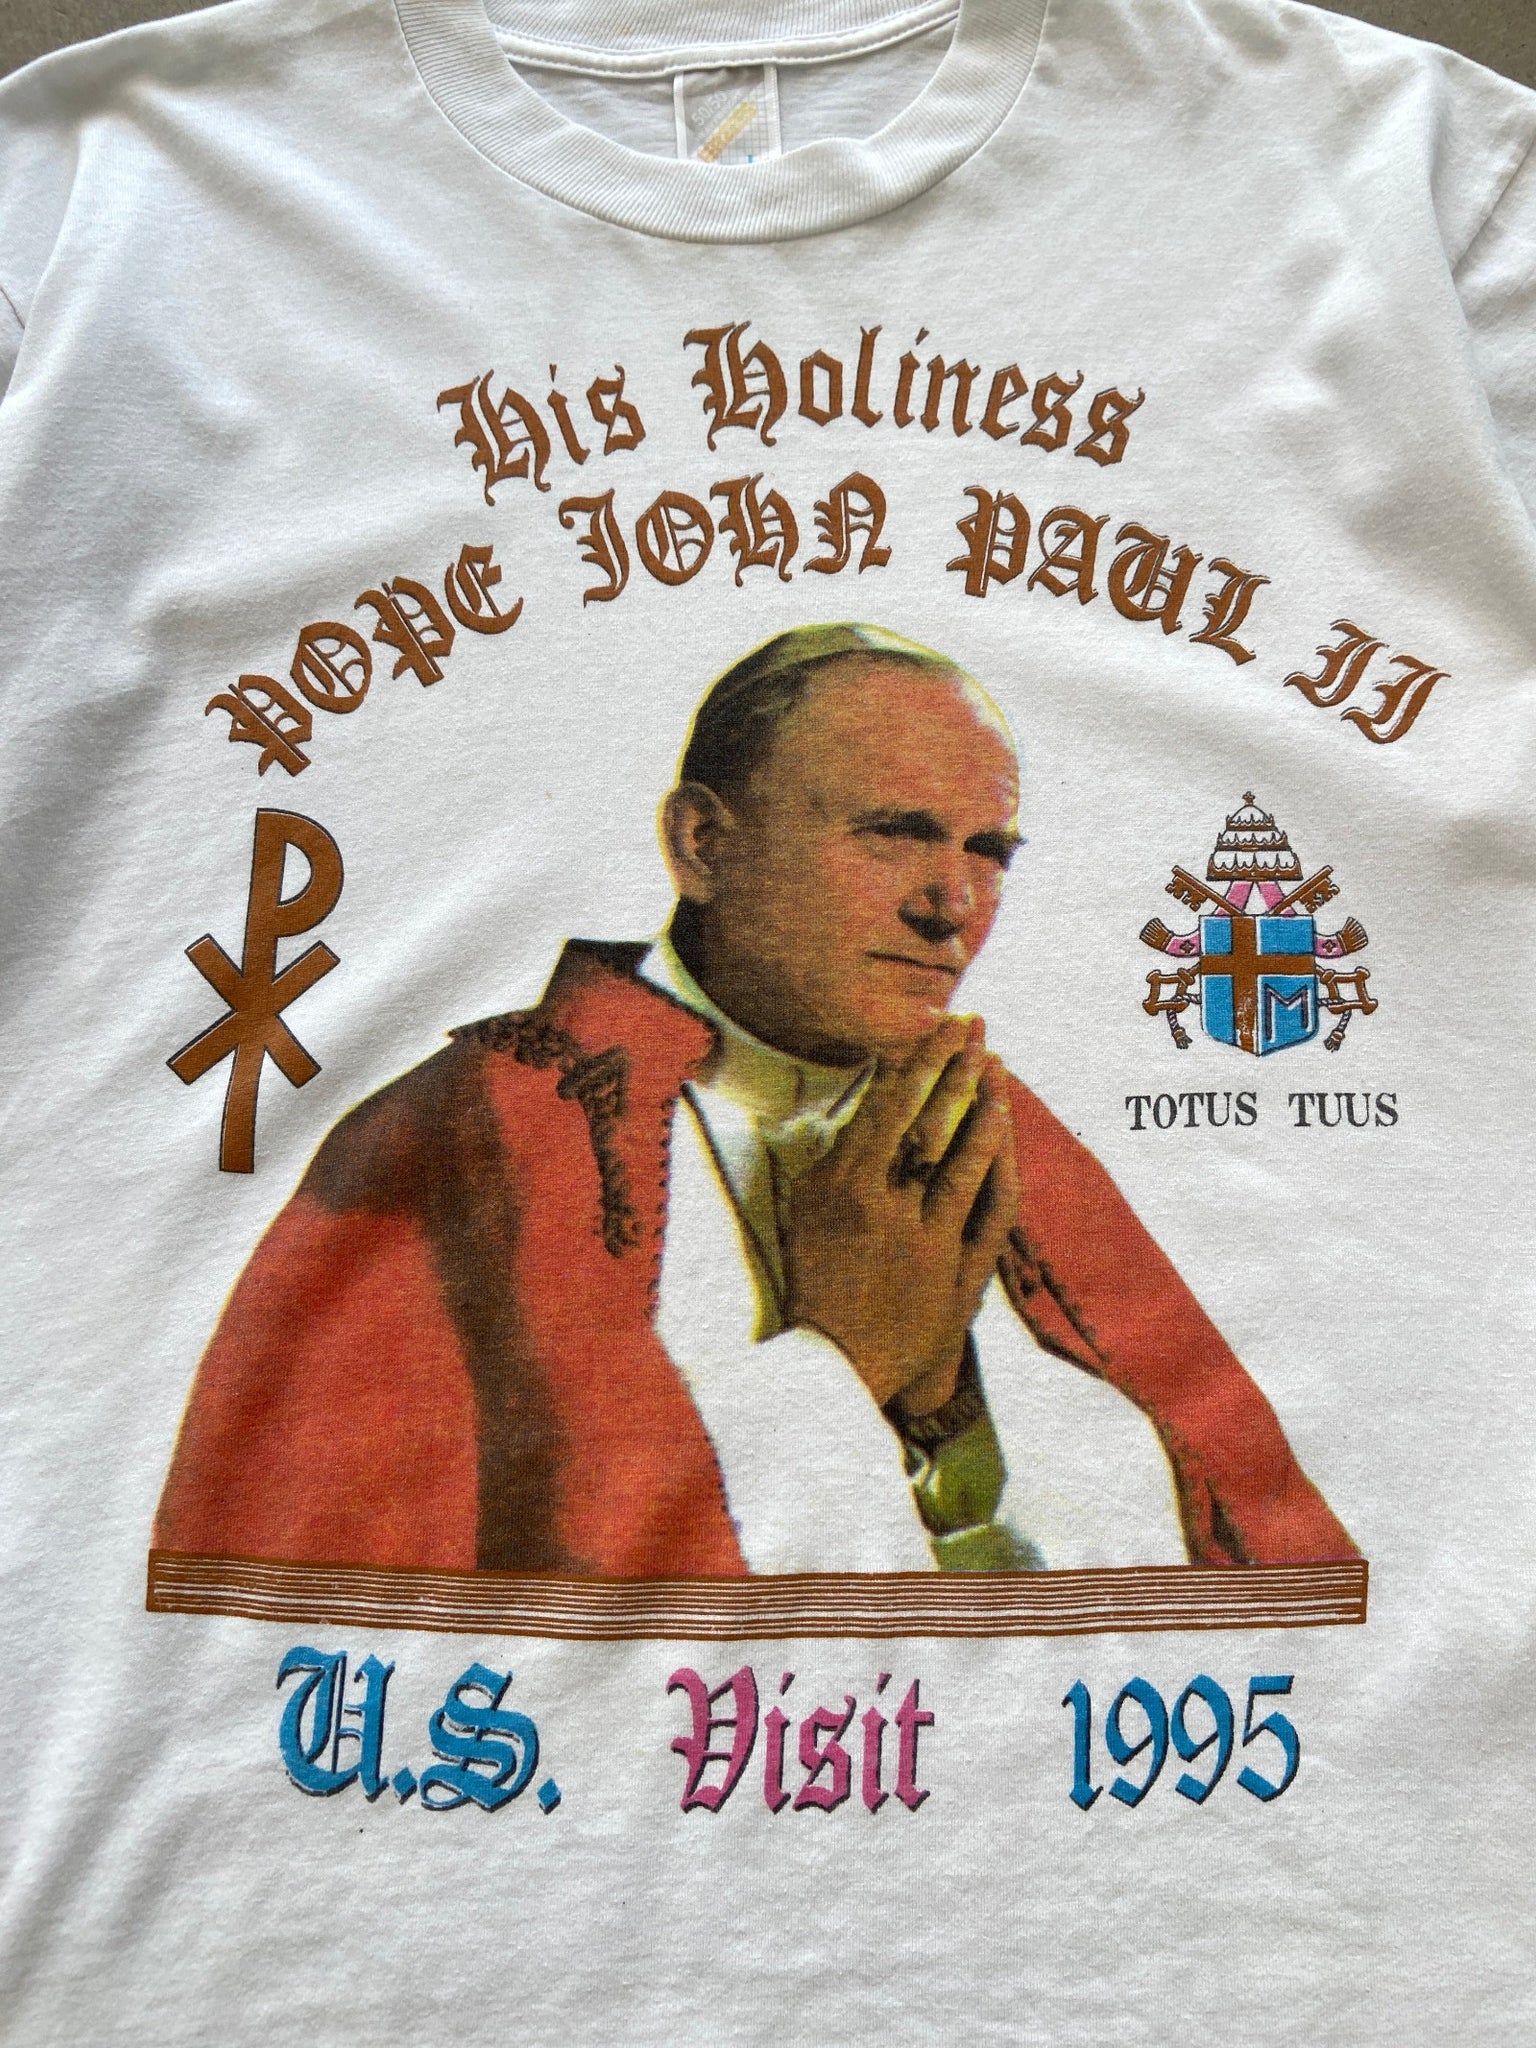 1995 Pope John Paul II US Visit T-Shirt - L